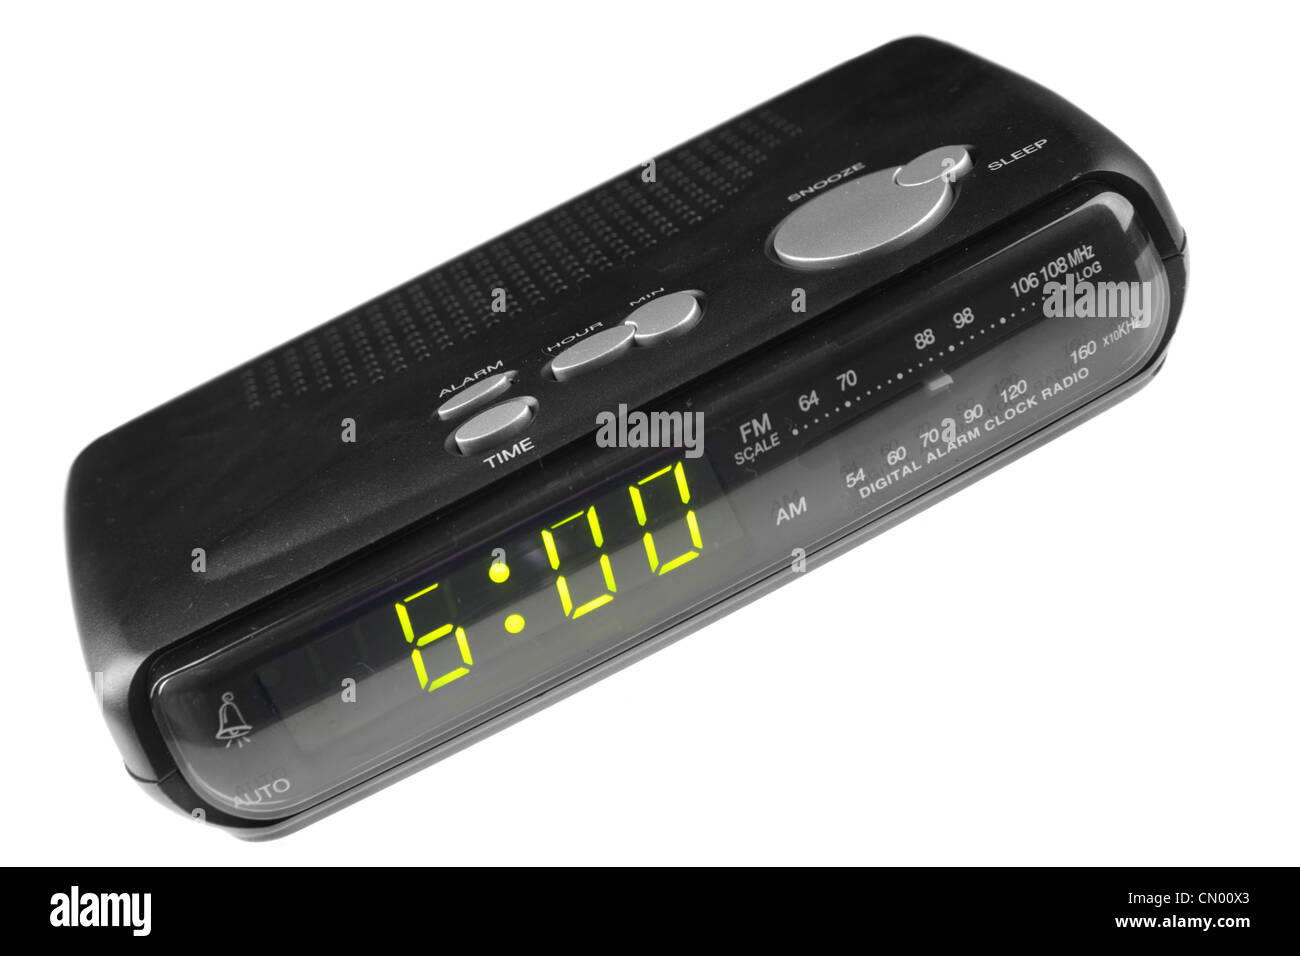 Digital alarm clock radio isolated over white background Stock Photo